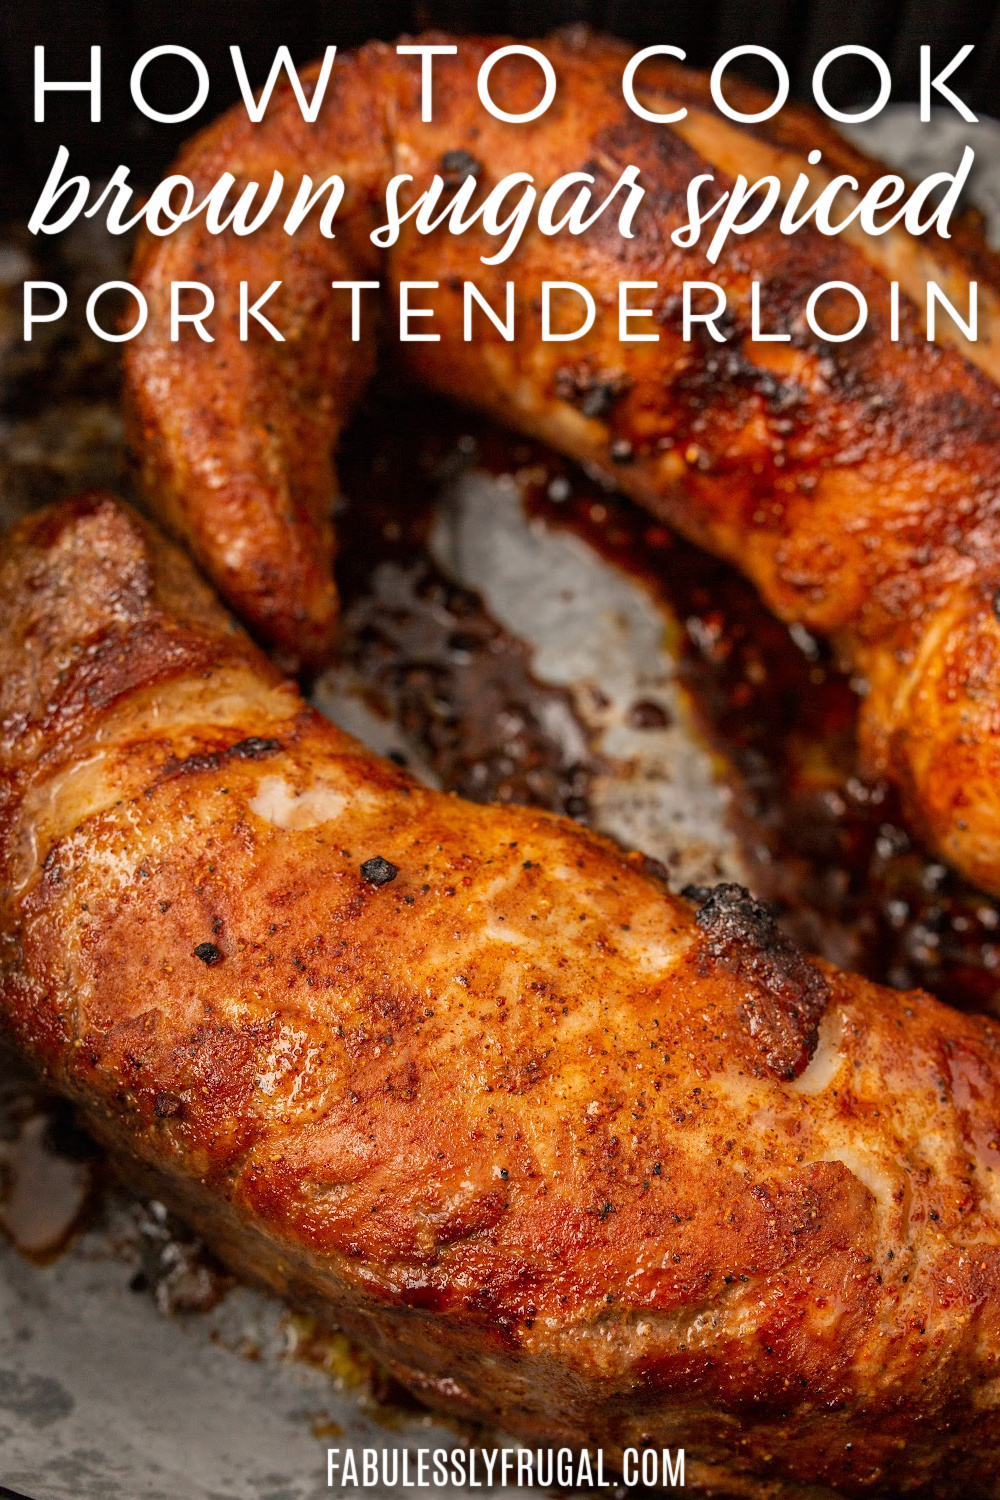 what does pork tenderloin look like?